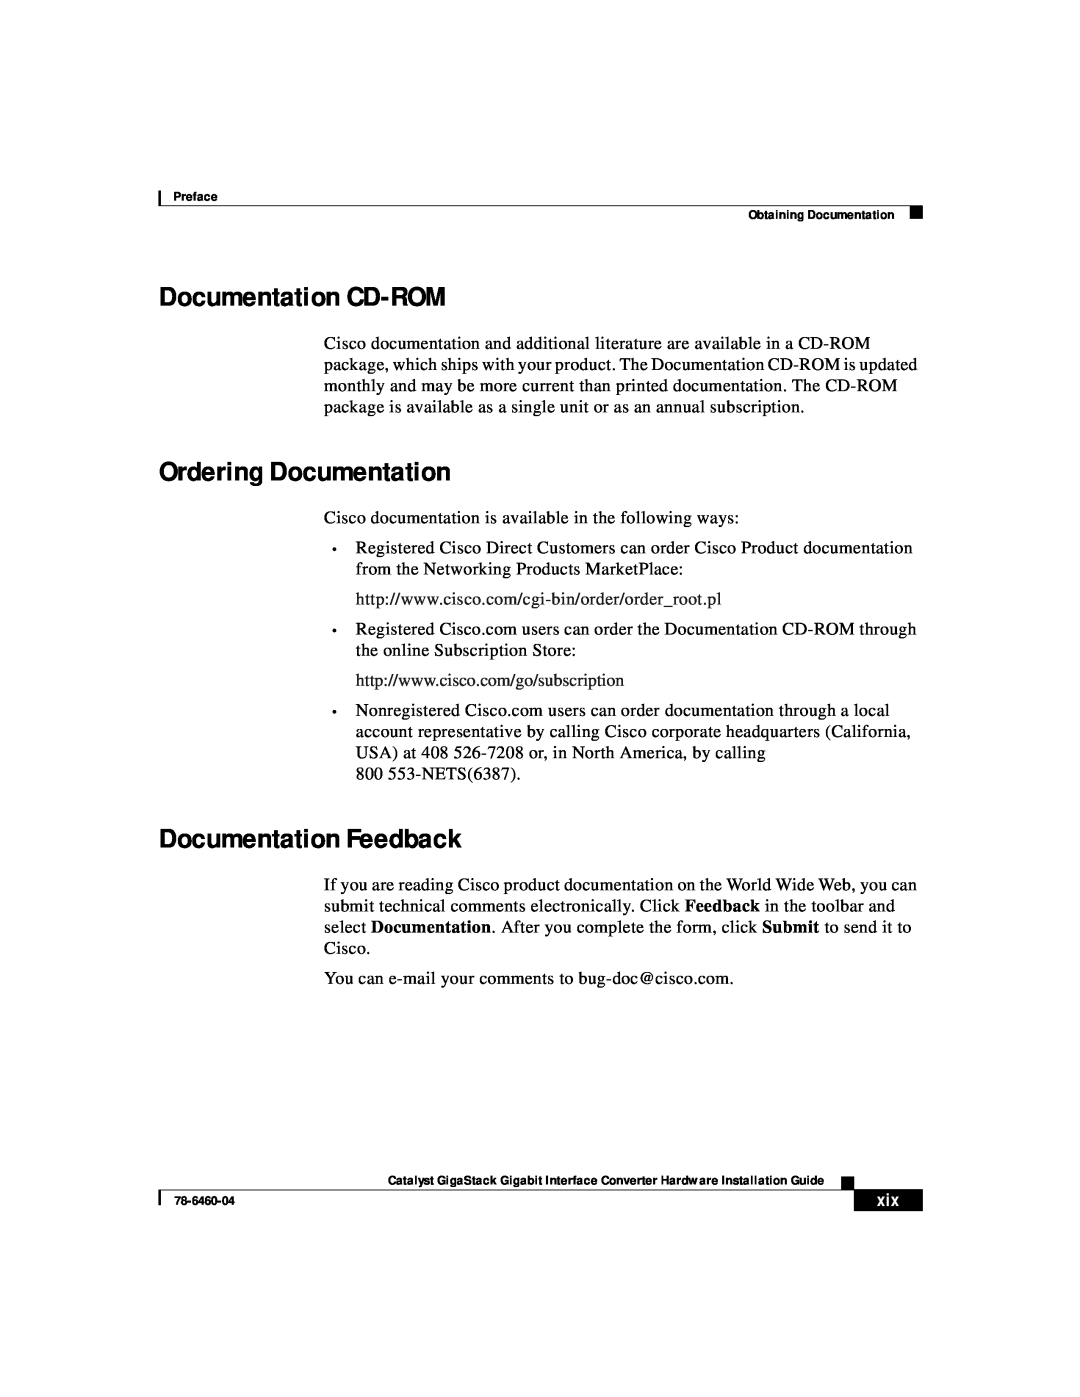 Cisco Systems WS-X3500-XL manual Documentation CD-ROM, Ordering Documentation, Documentation Feedback 